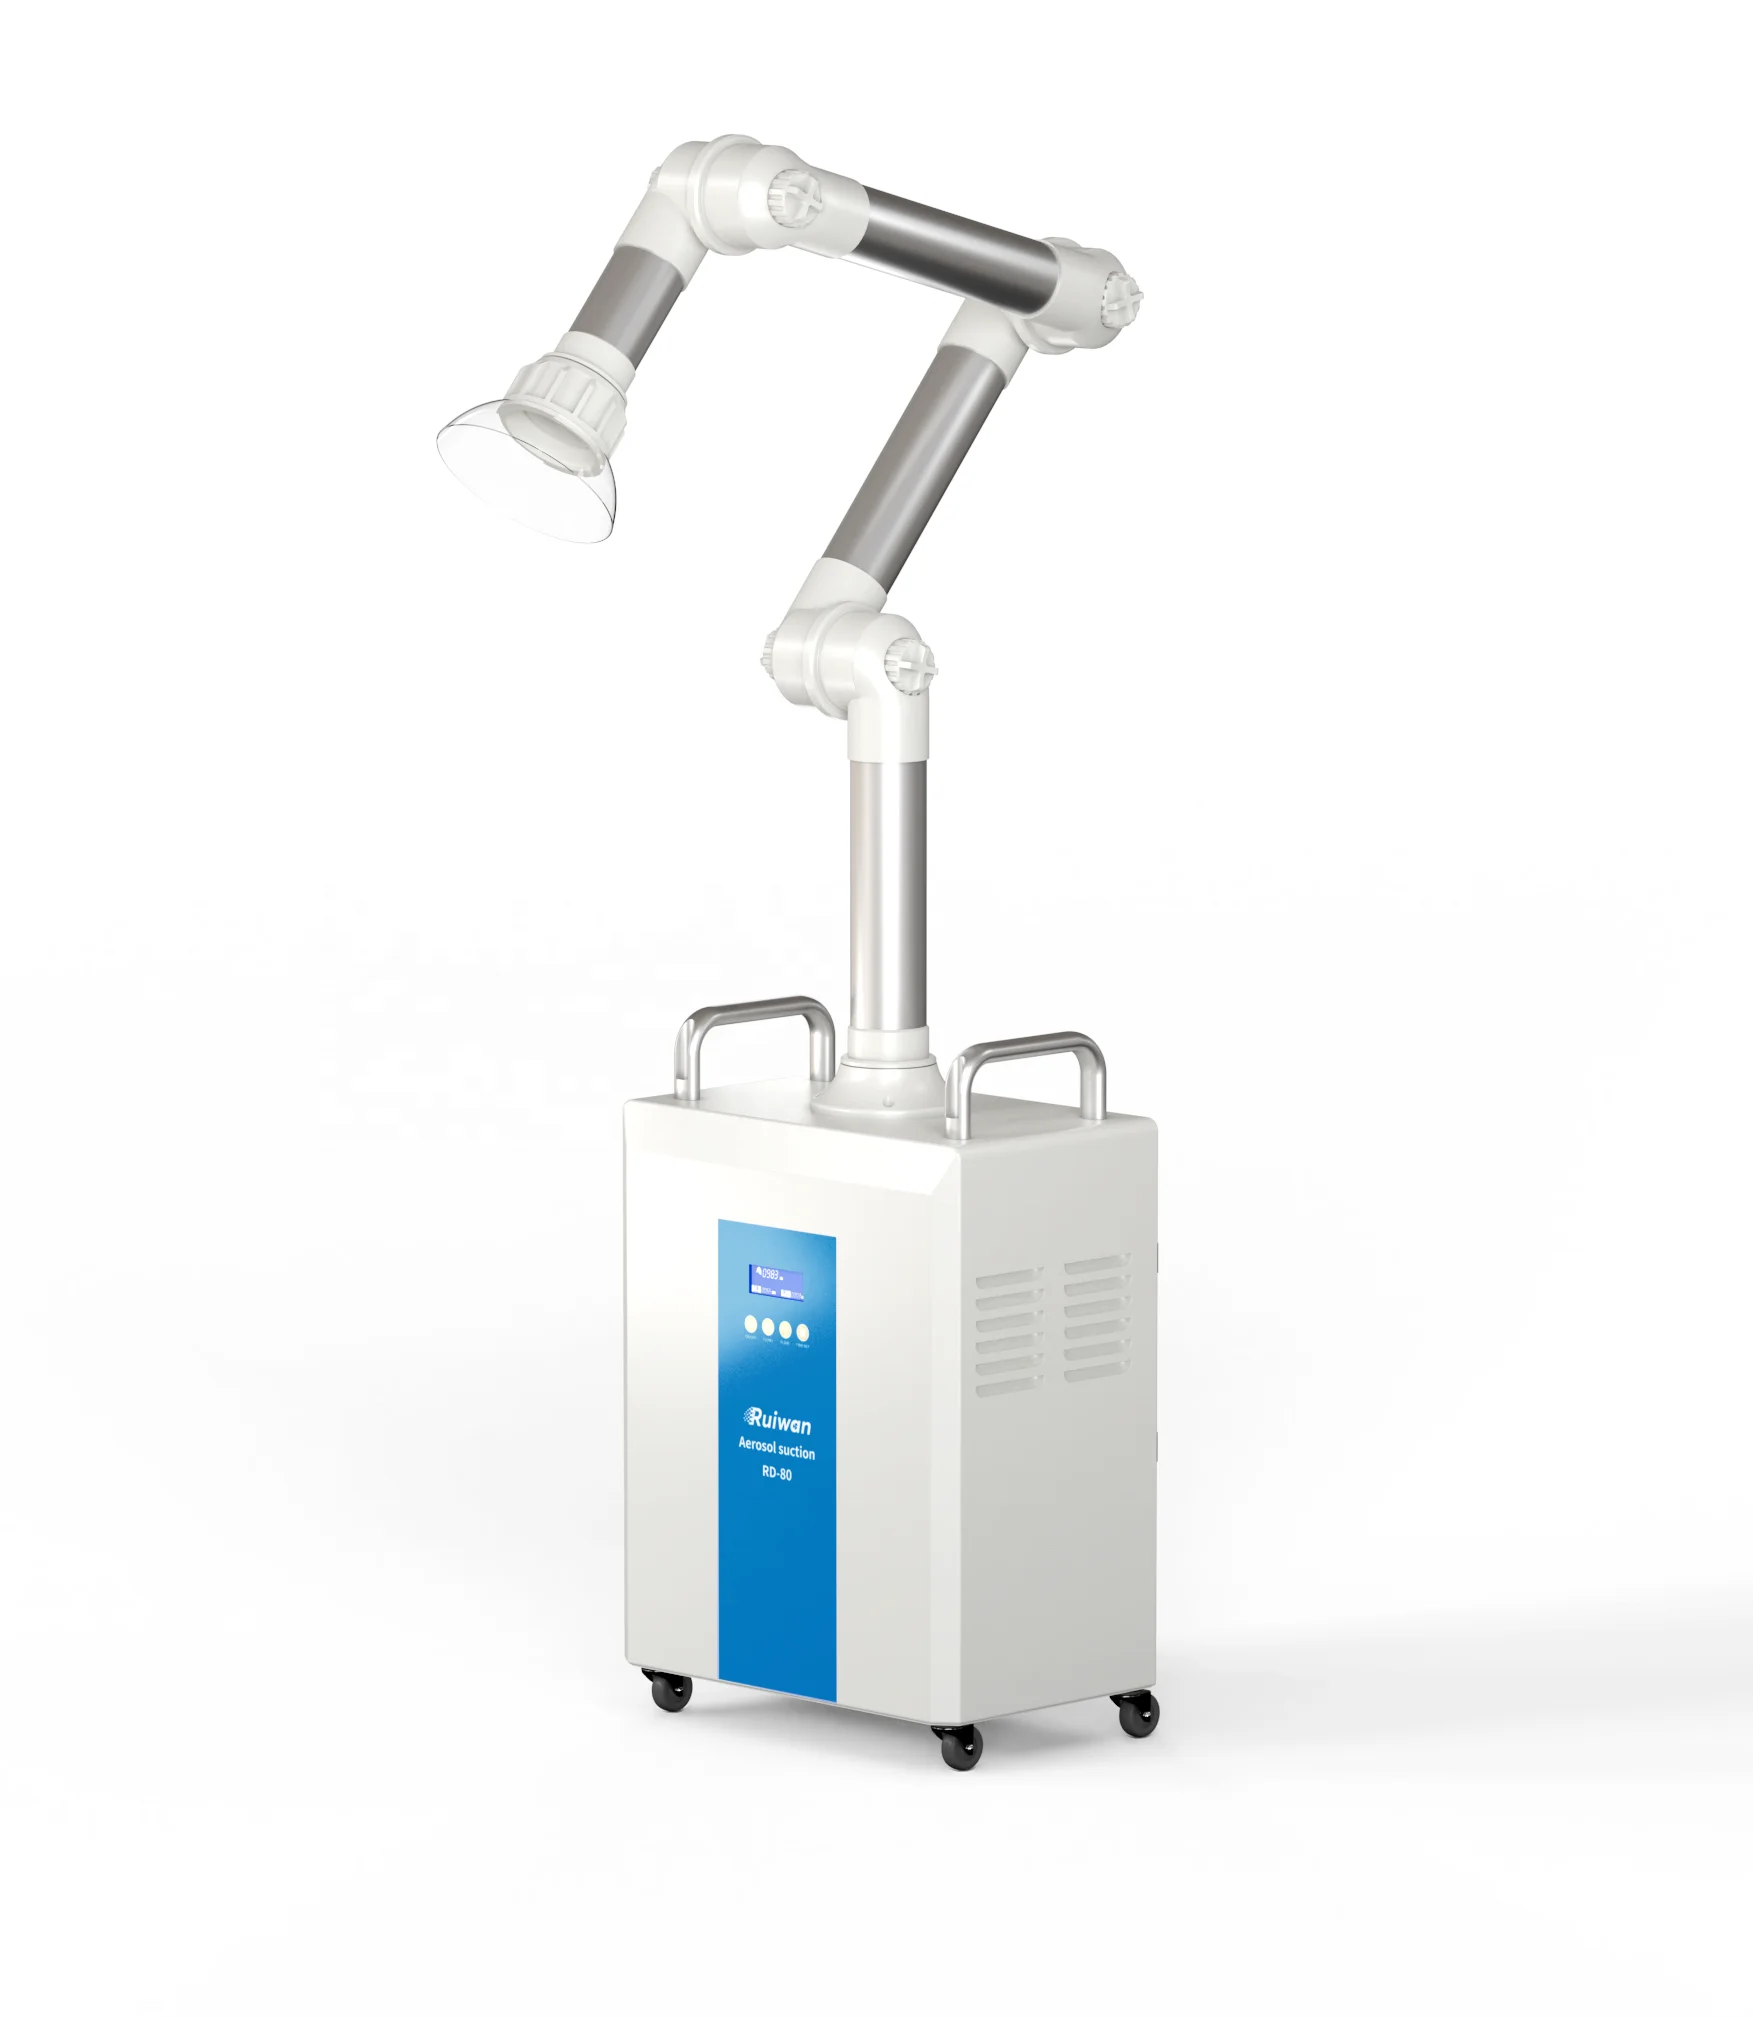 
external oral suction hospital aerosol suction machine  (62550763385)